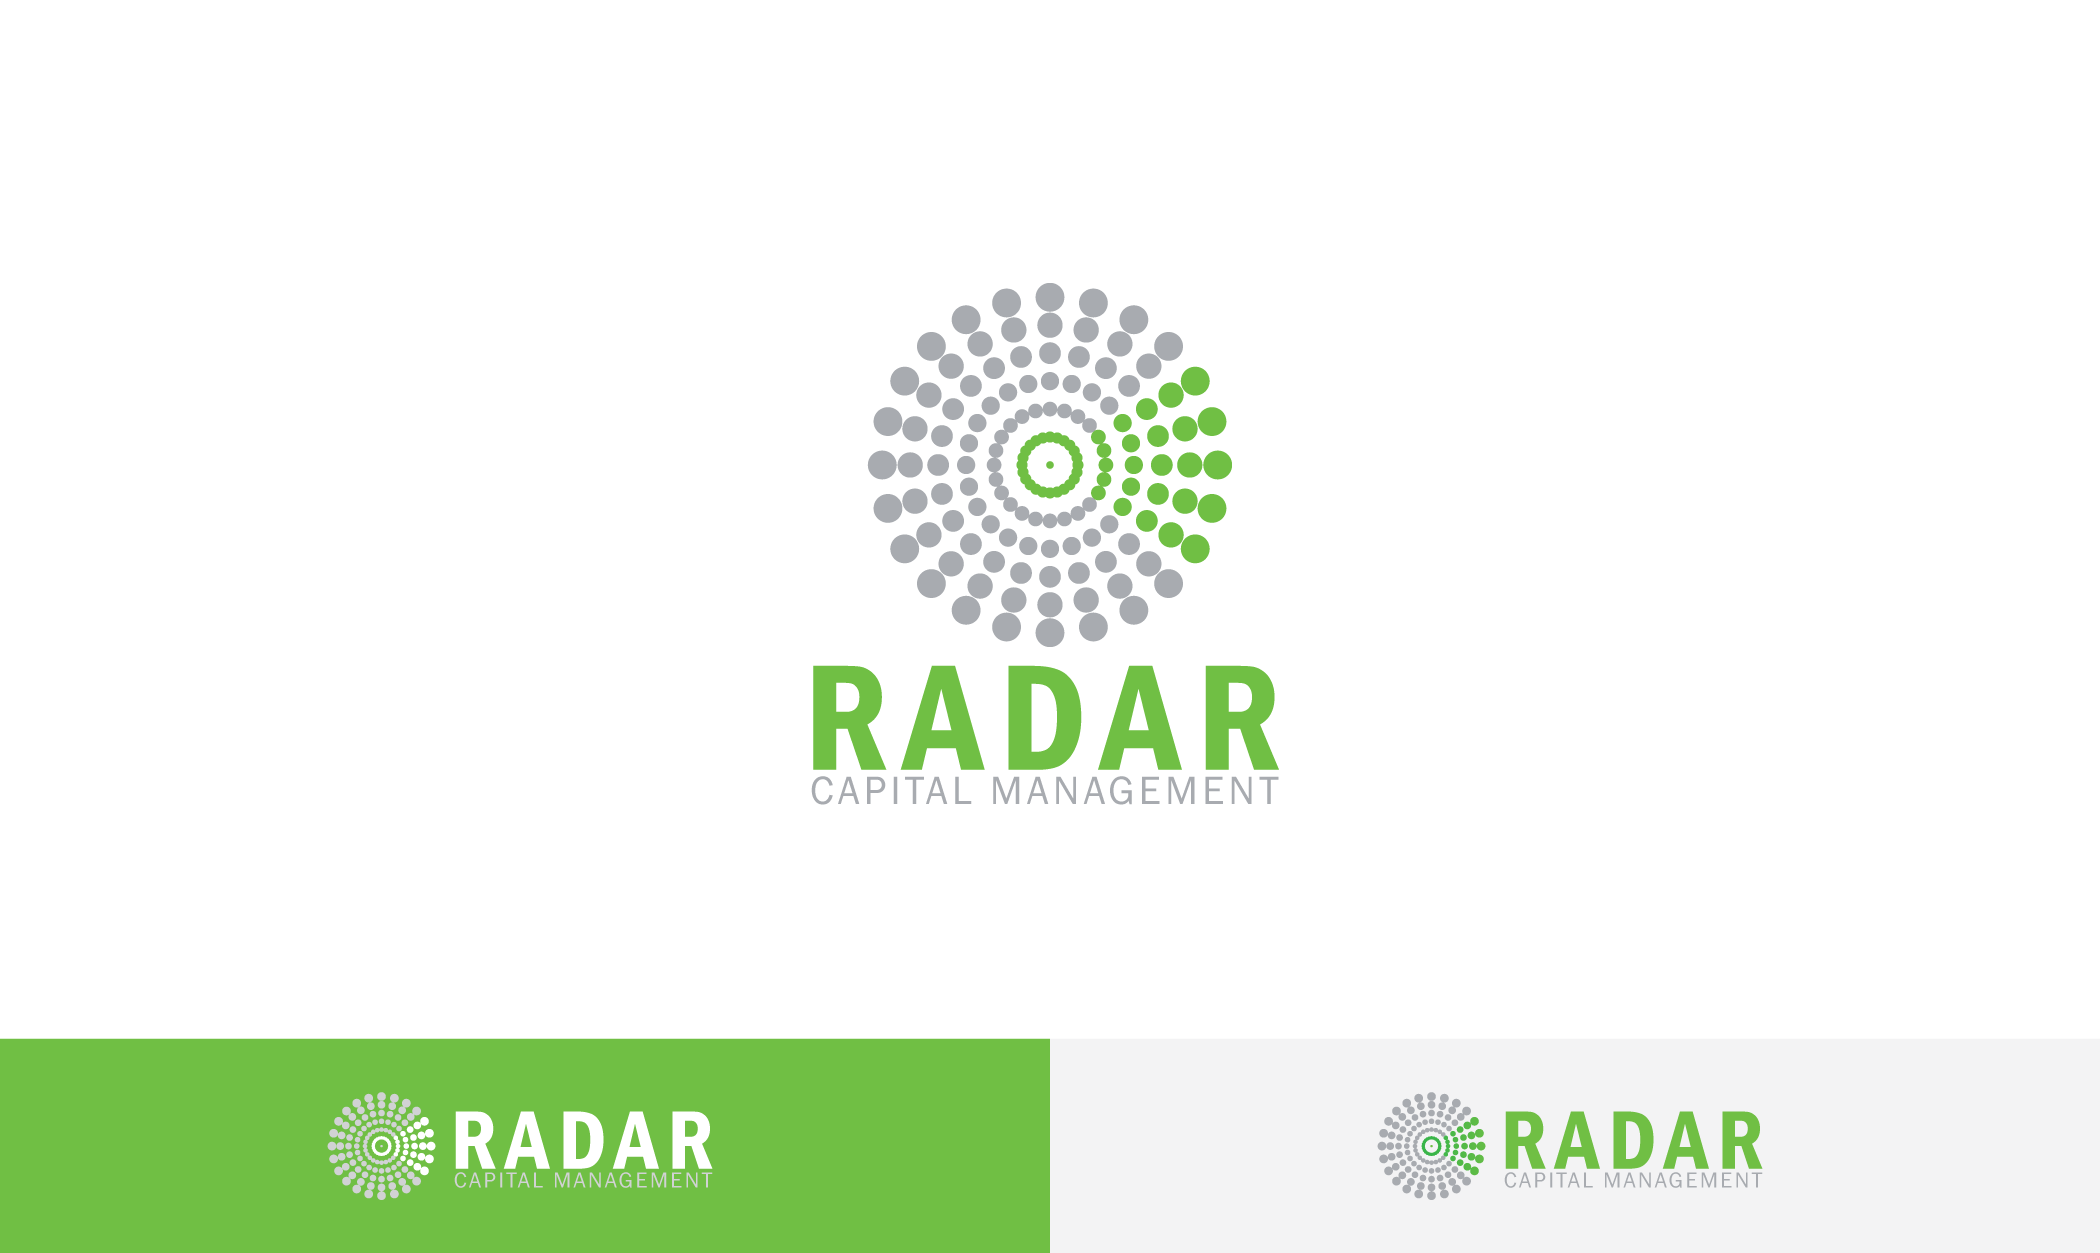 Radar Logo - Logo Design. 'Radar Capital Management' design project